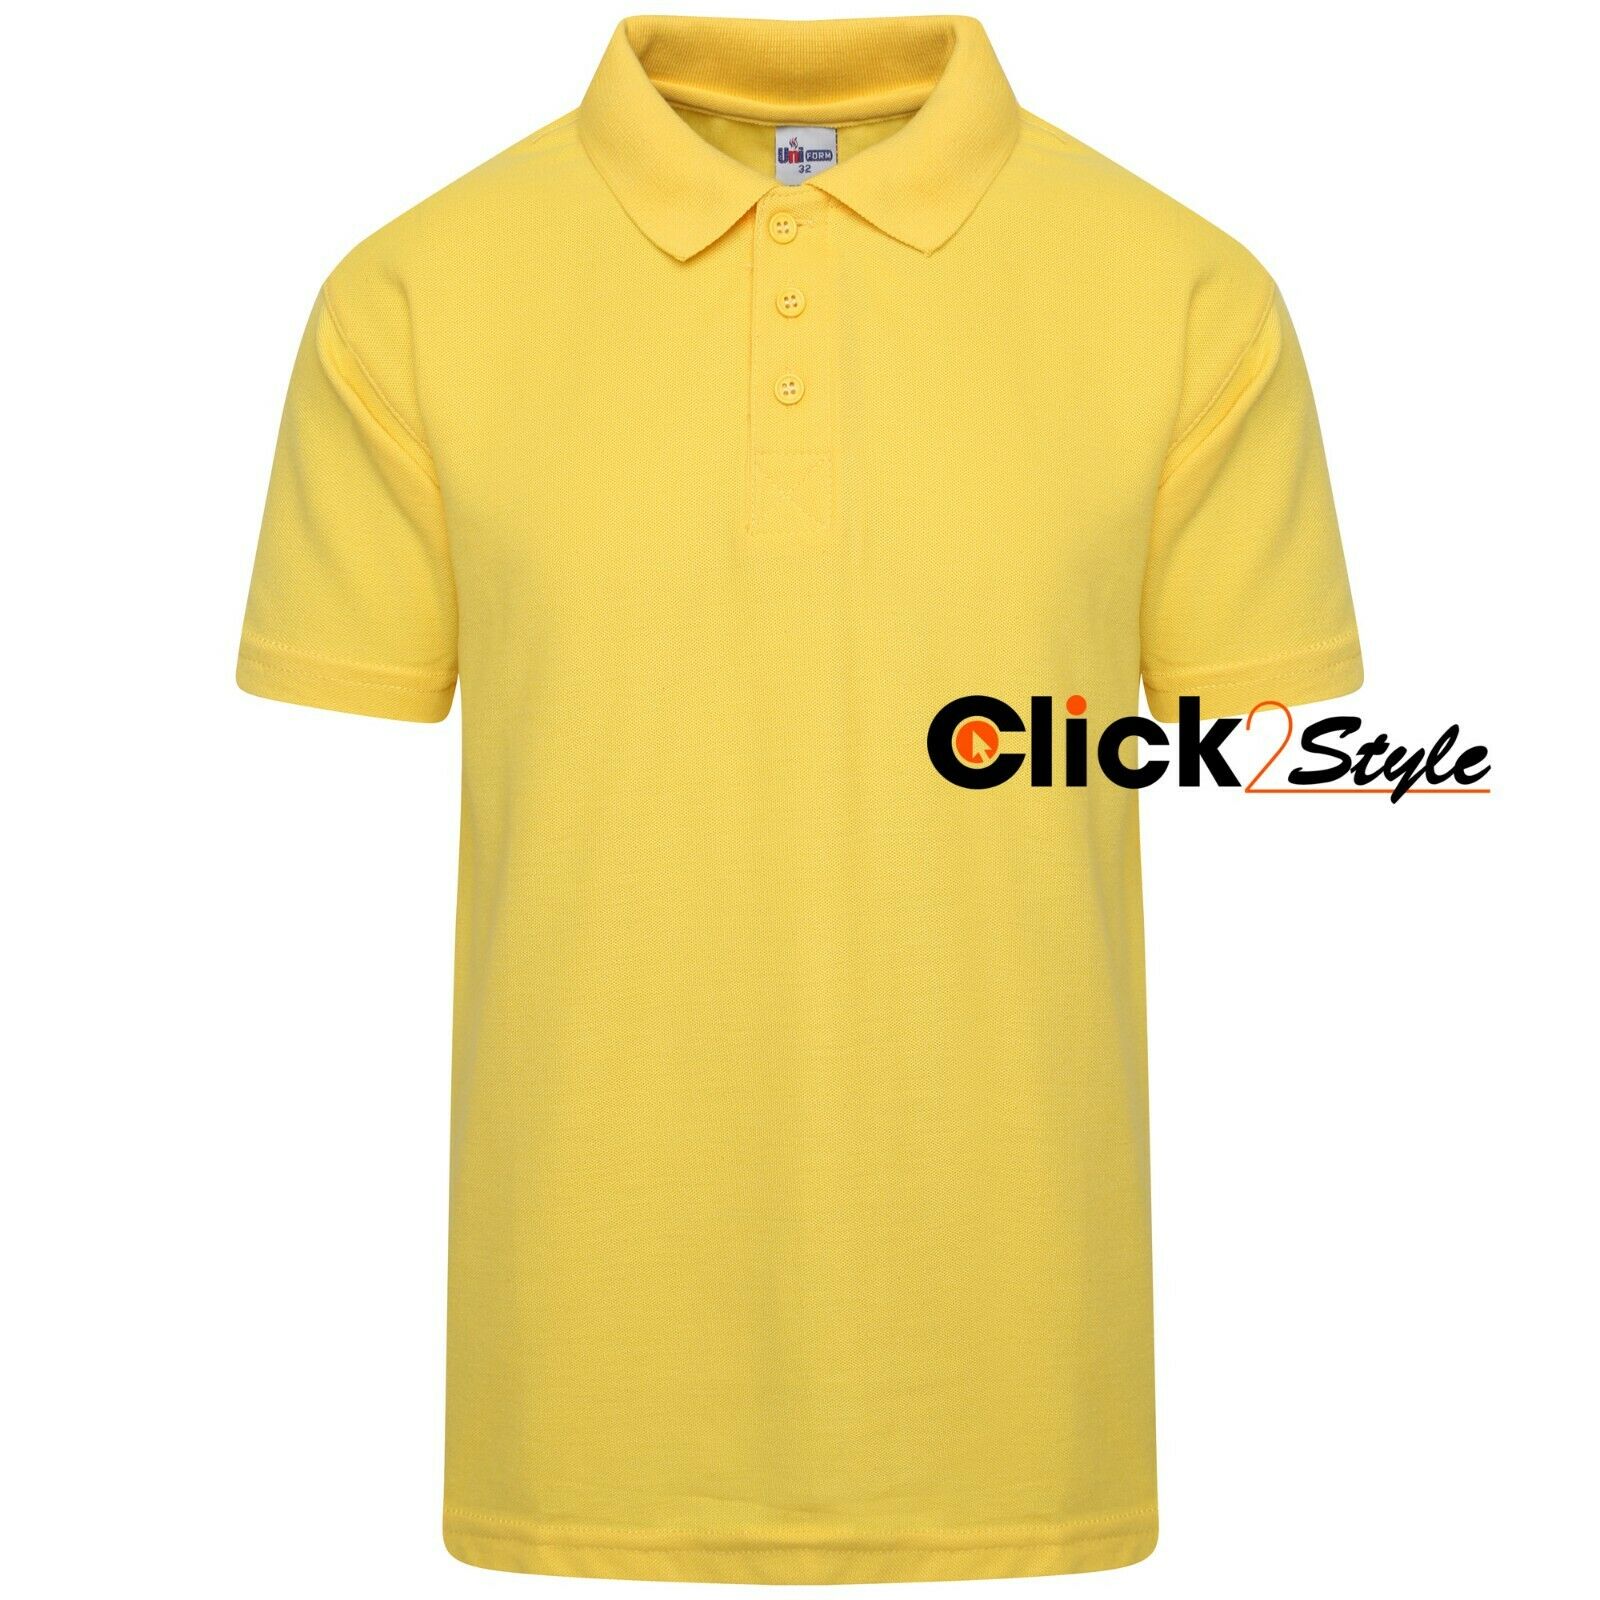 School Uniform Yellow Polo T Shirts Plain Kids T Shirt Boys Girls Tee Top Sports